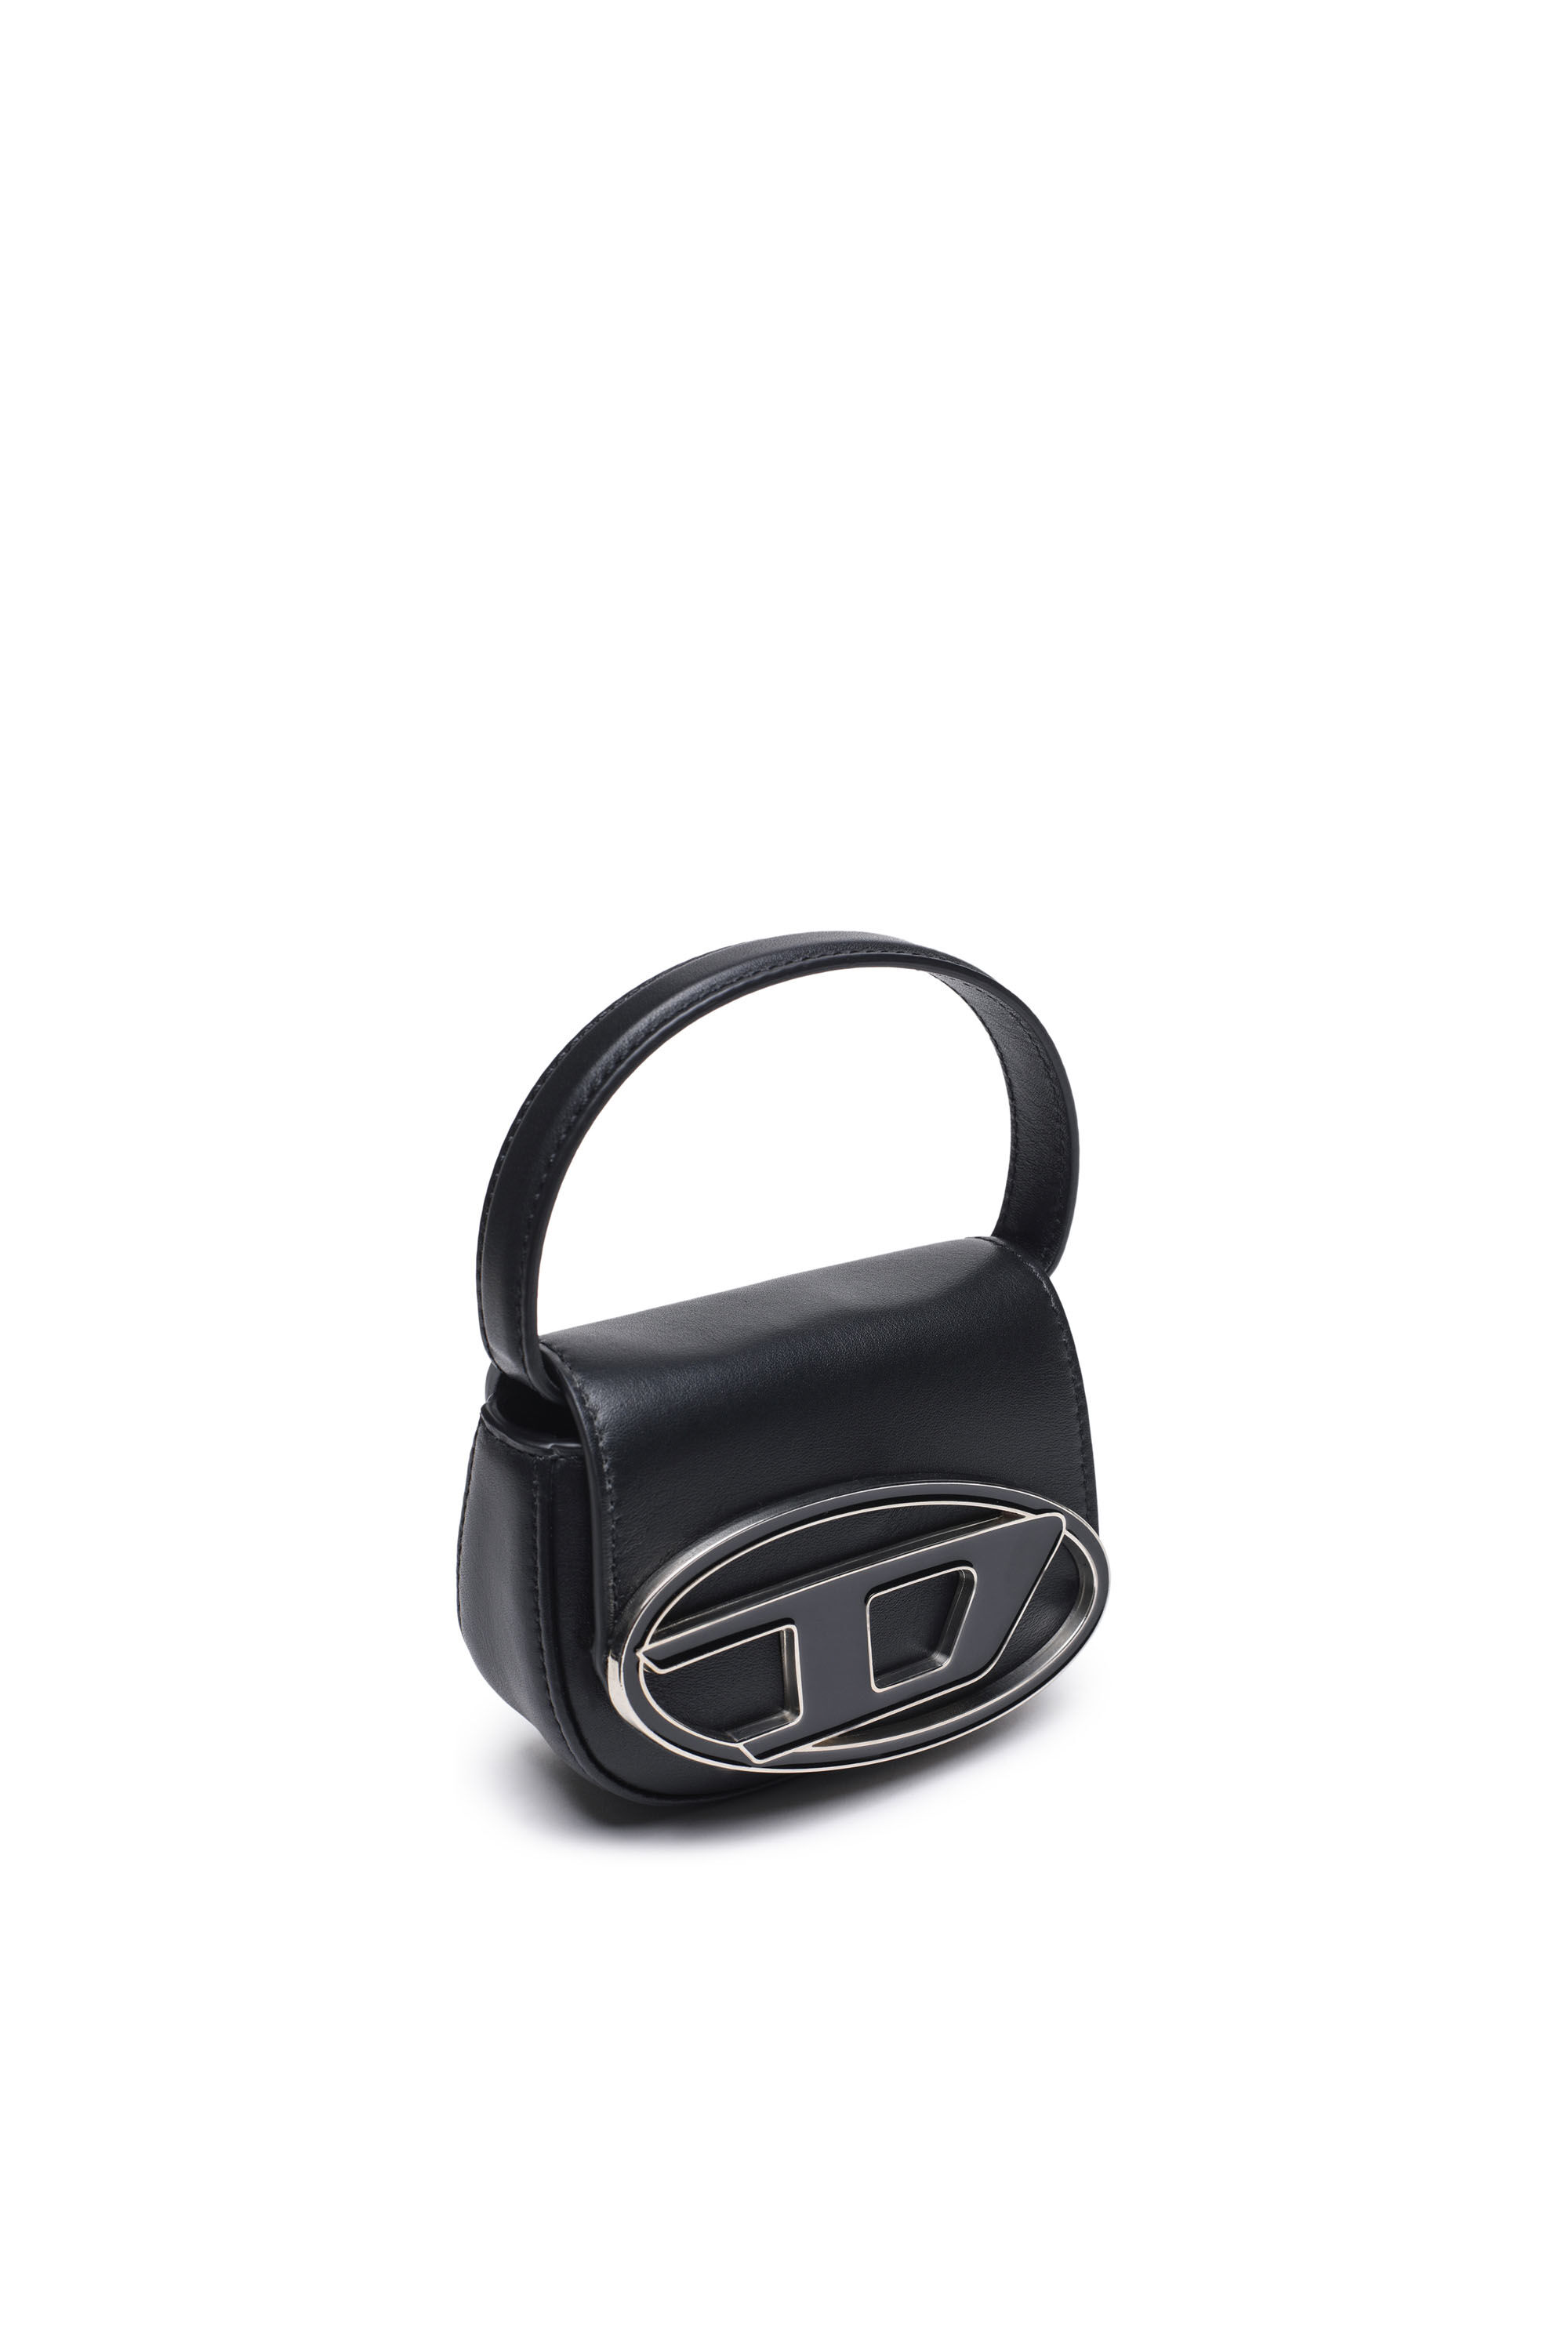 1DR XS Bag Woman: leather mini Bag with D logo plaque | Diesel